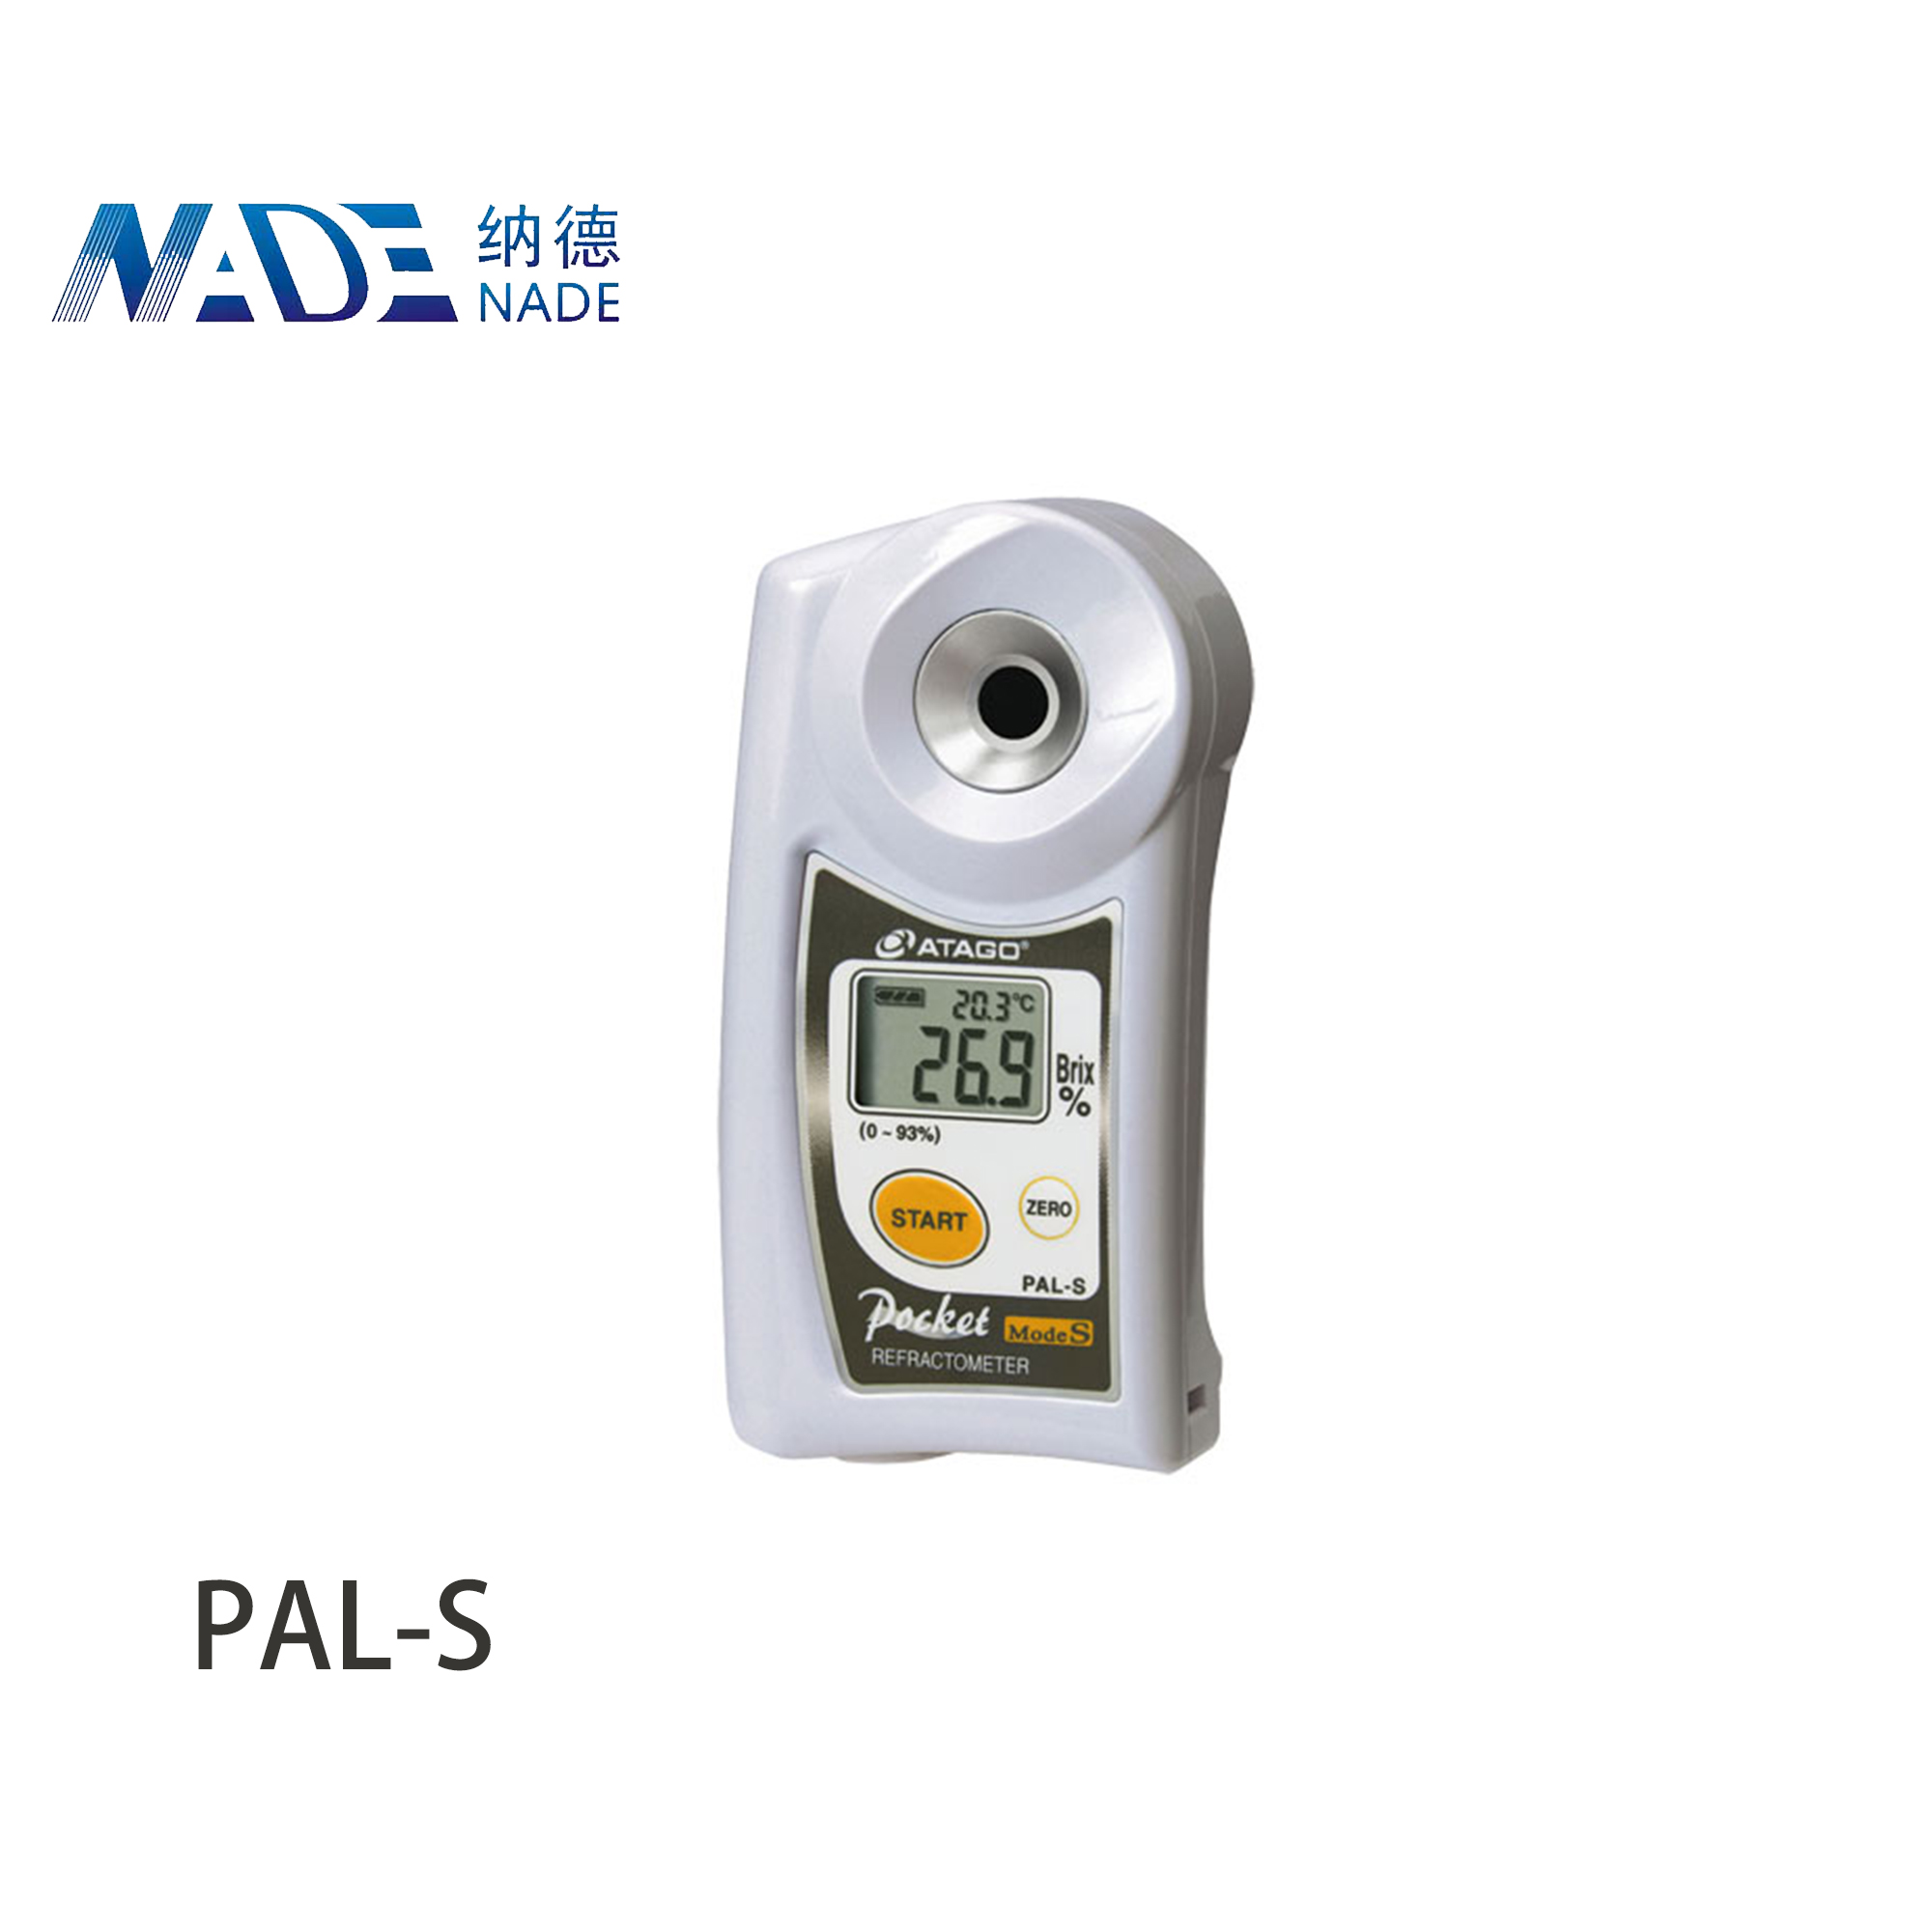 PAL-alpha Digital Atago refractometer (polarimeter) hand held auto refractometer wide range(0-85%)